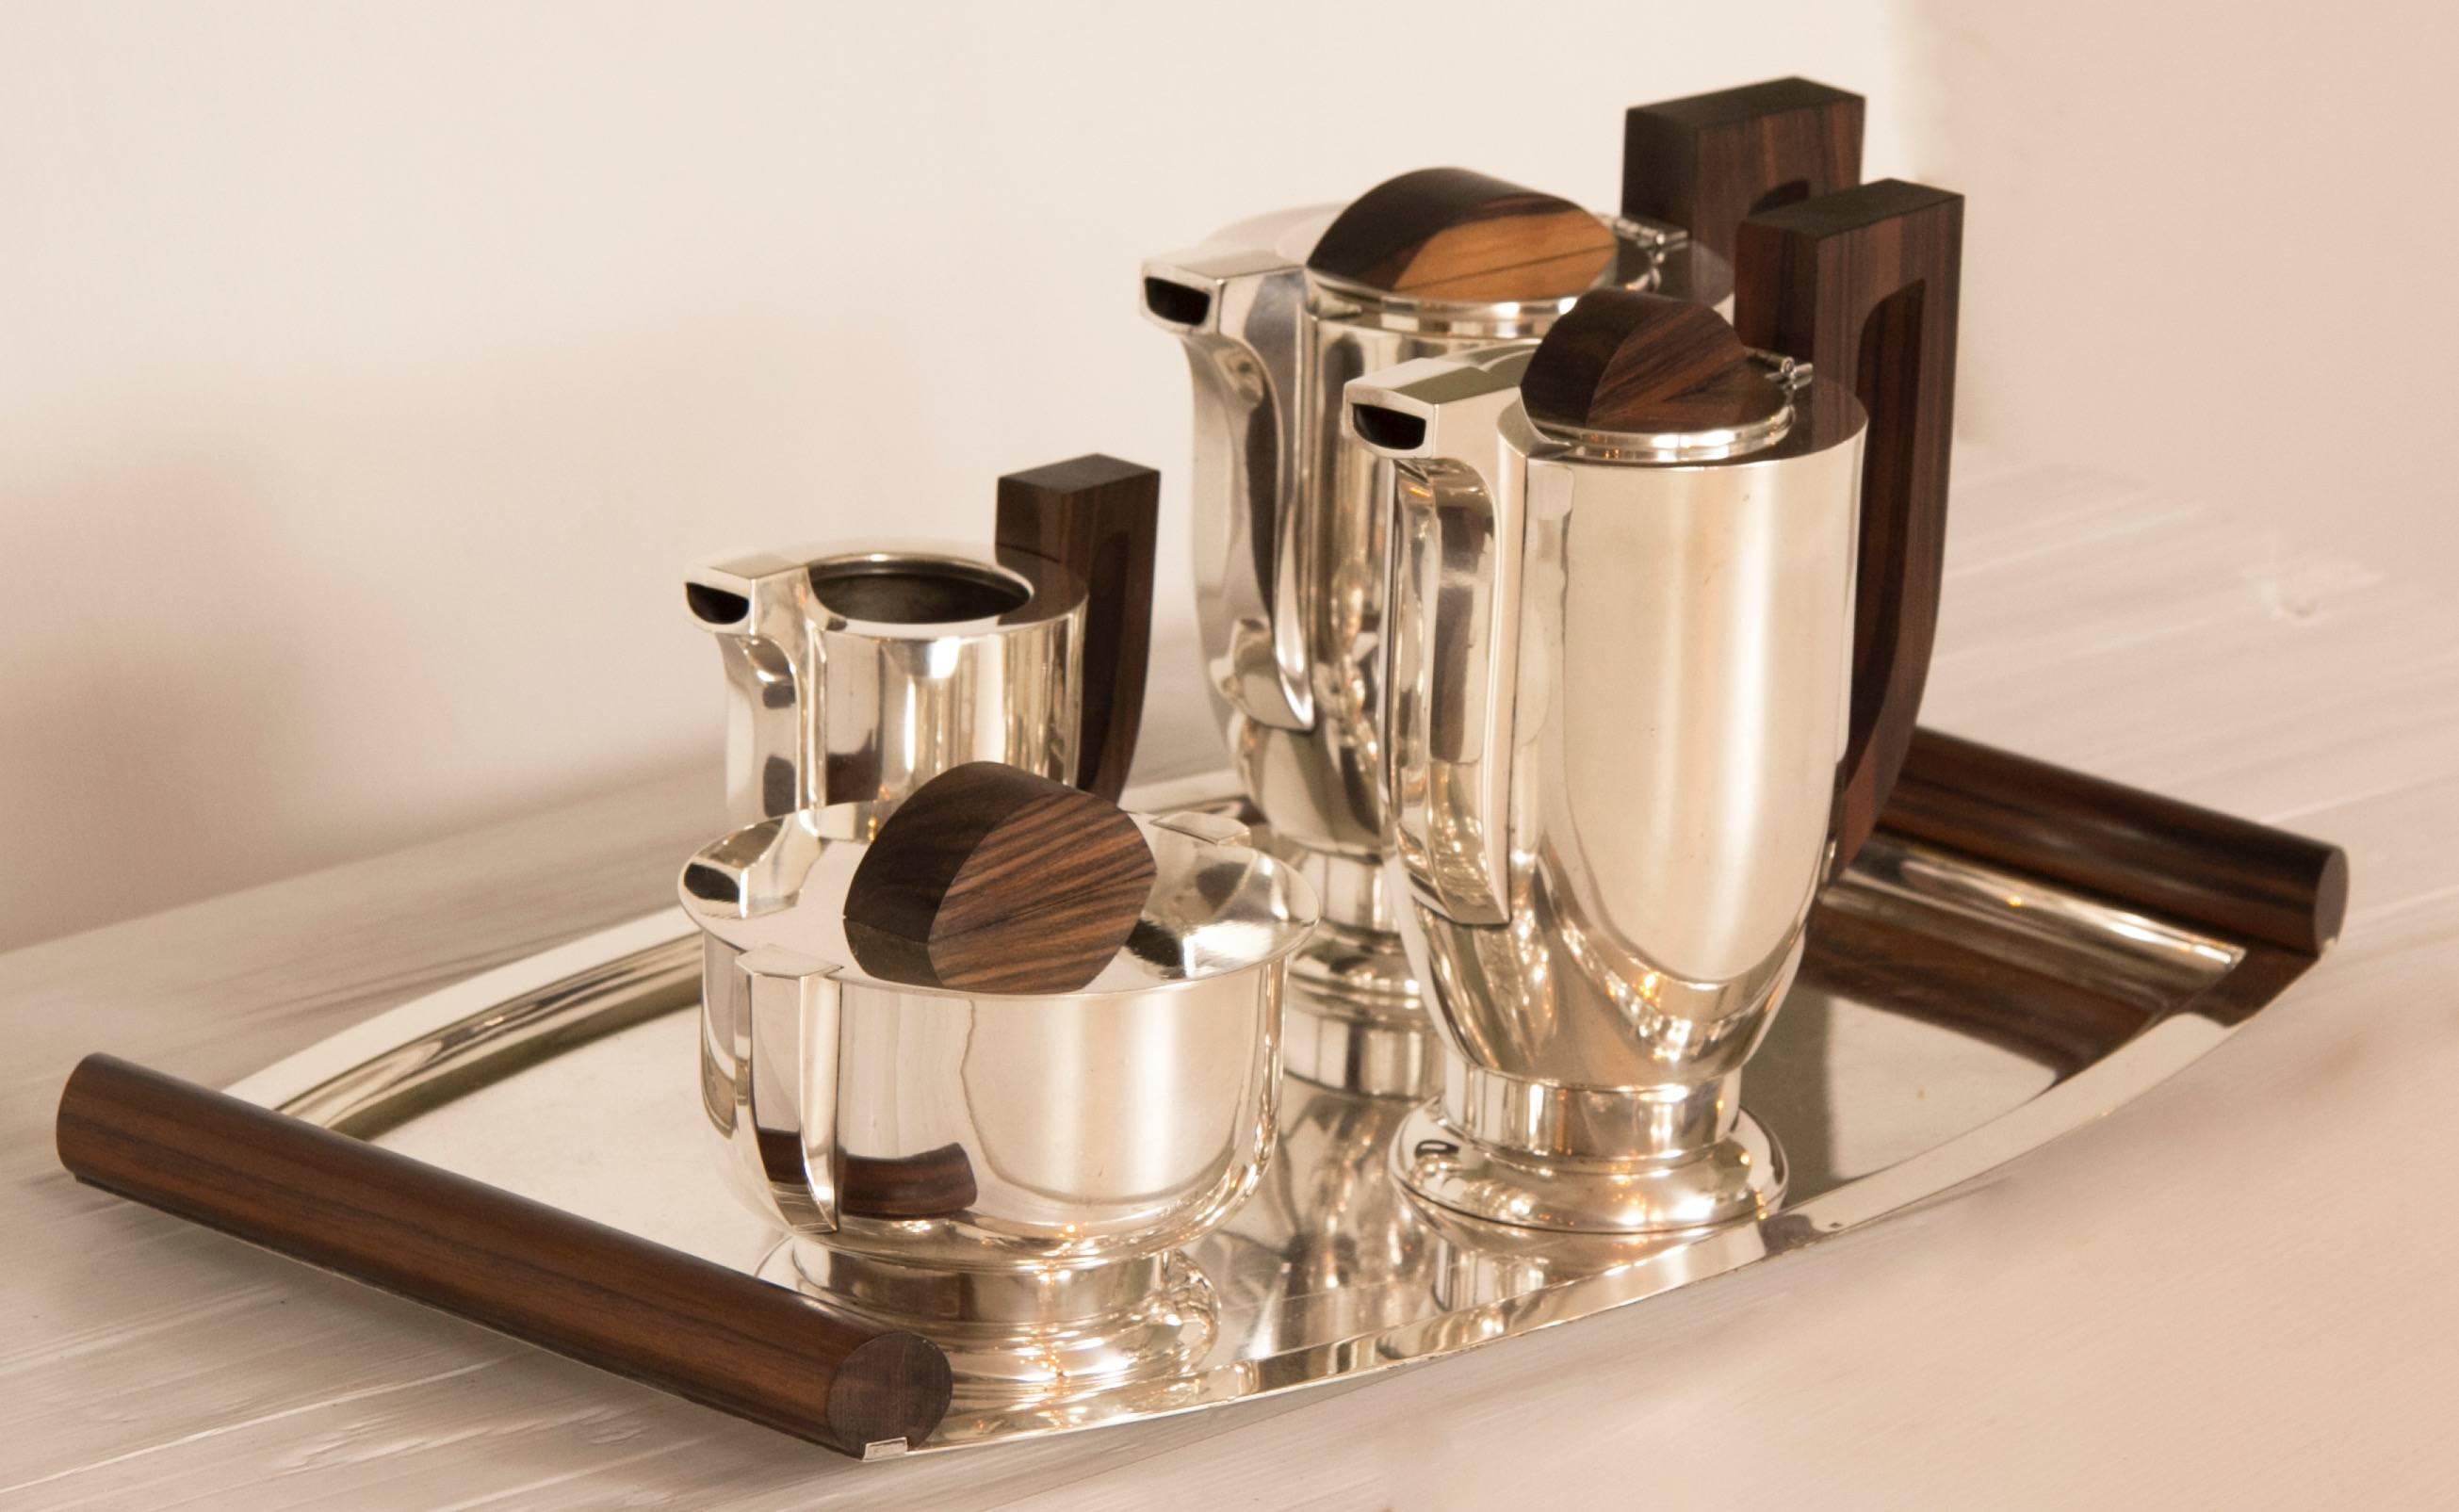 Art Deco silver plate tea set on its original tray, tea pot, hot water pot, milk jug, covered sugar bowl and tray.
Measures: Tray - H: 4 cm W: 51 cm D: 32 cm 
Tea Pot - H: 21 cm W: 19 cm D: 11 cm
French, circa 1930.